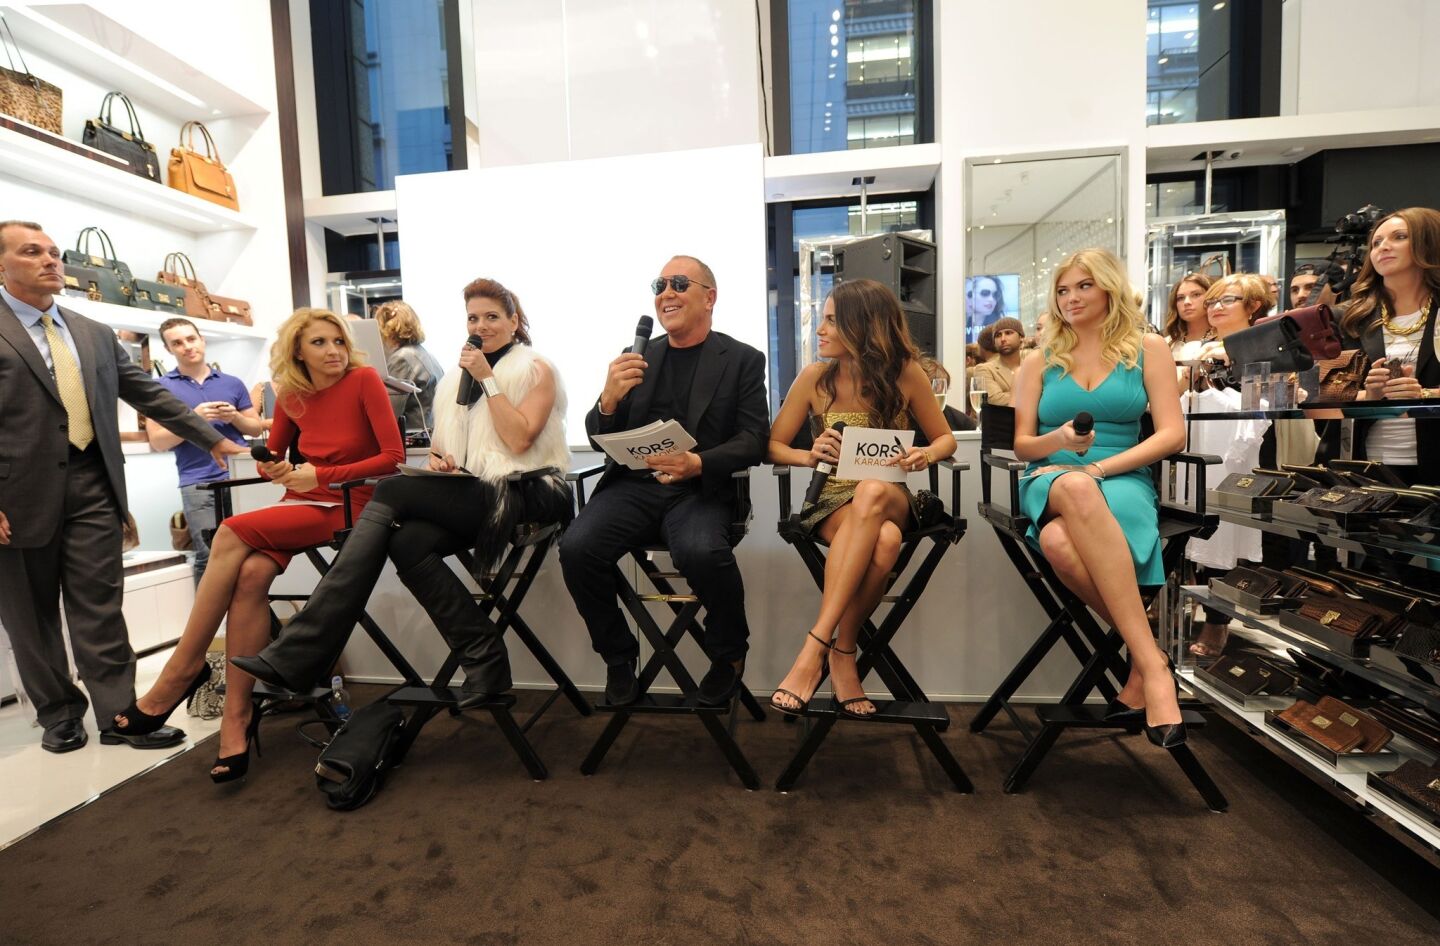 Actress Nina Arianda, actress Debra Messing, designer Michael Kors, actress Nikki Reed and model Kate Upton celebrate Fashion's Night Out at Michael Kors in New York City.